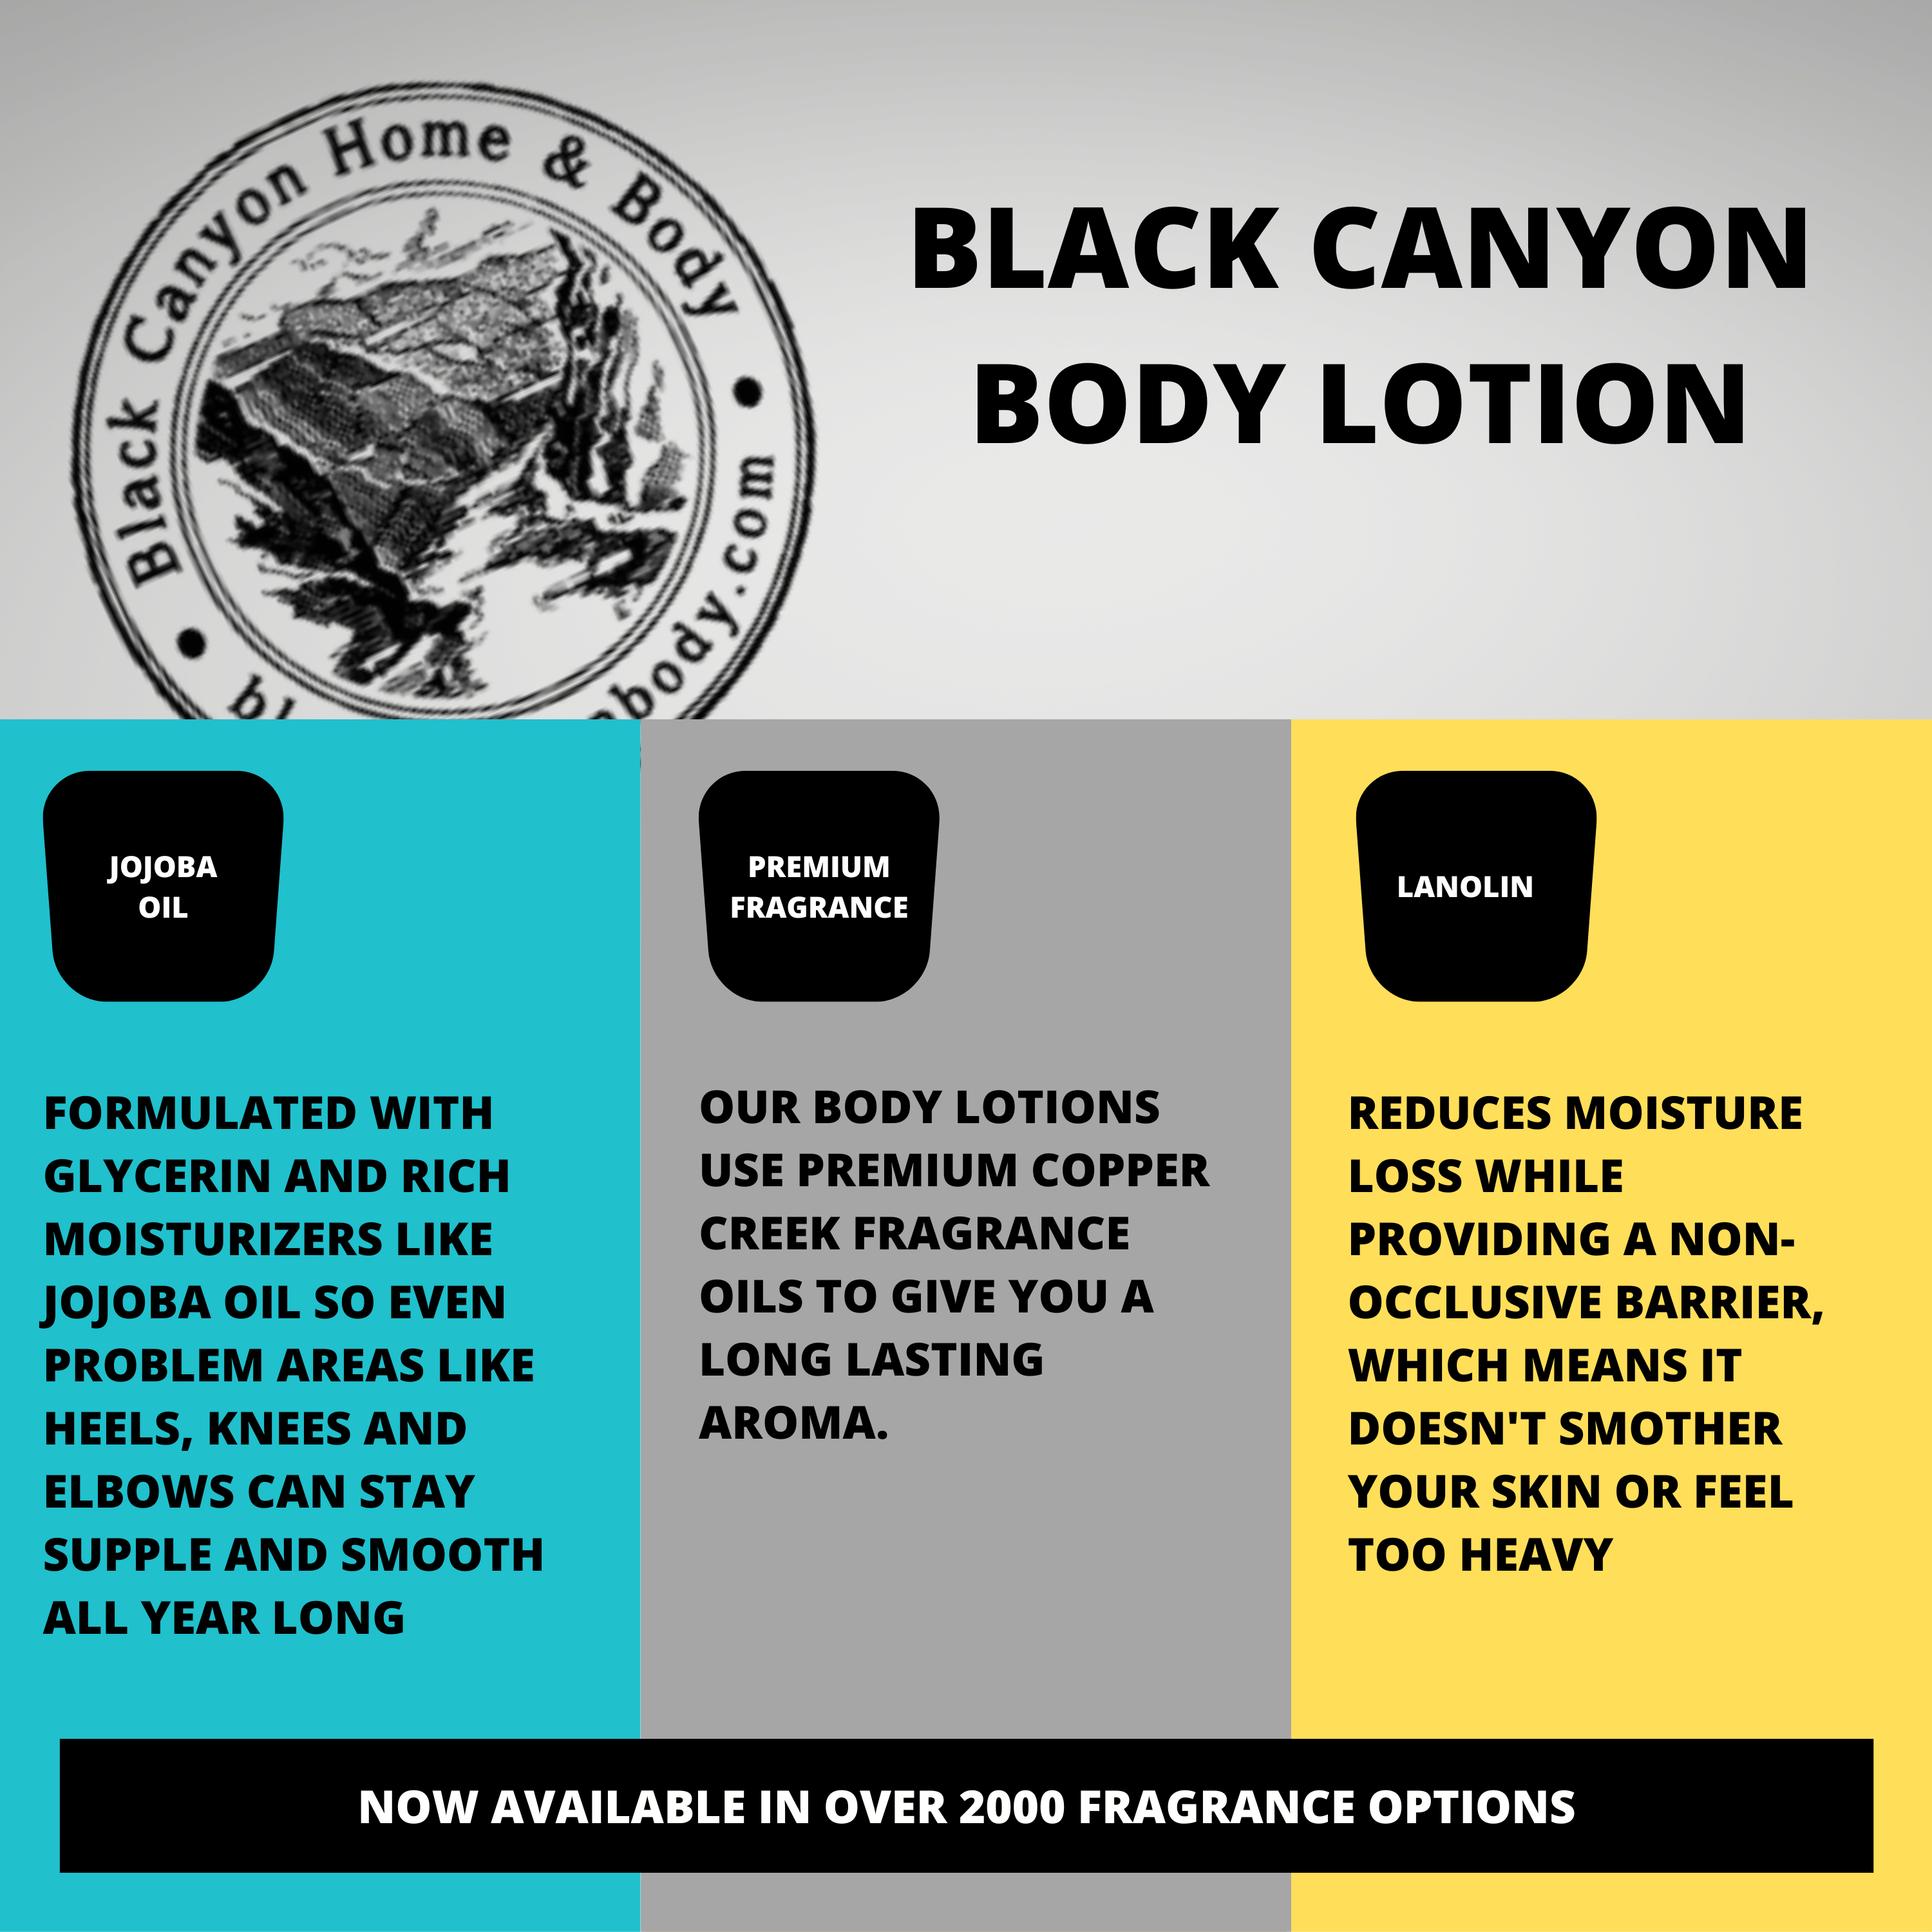 Black Canyon Sour Lemon & Vanilla Scented Luxury Body Lotion with Lanolin and Jojoba Oil